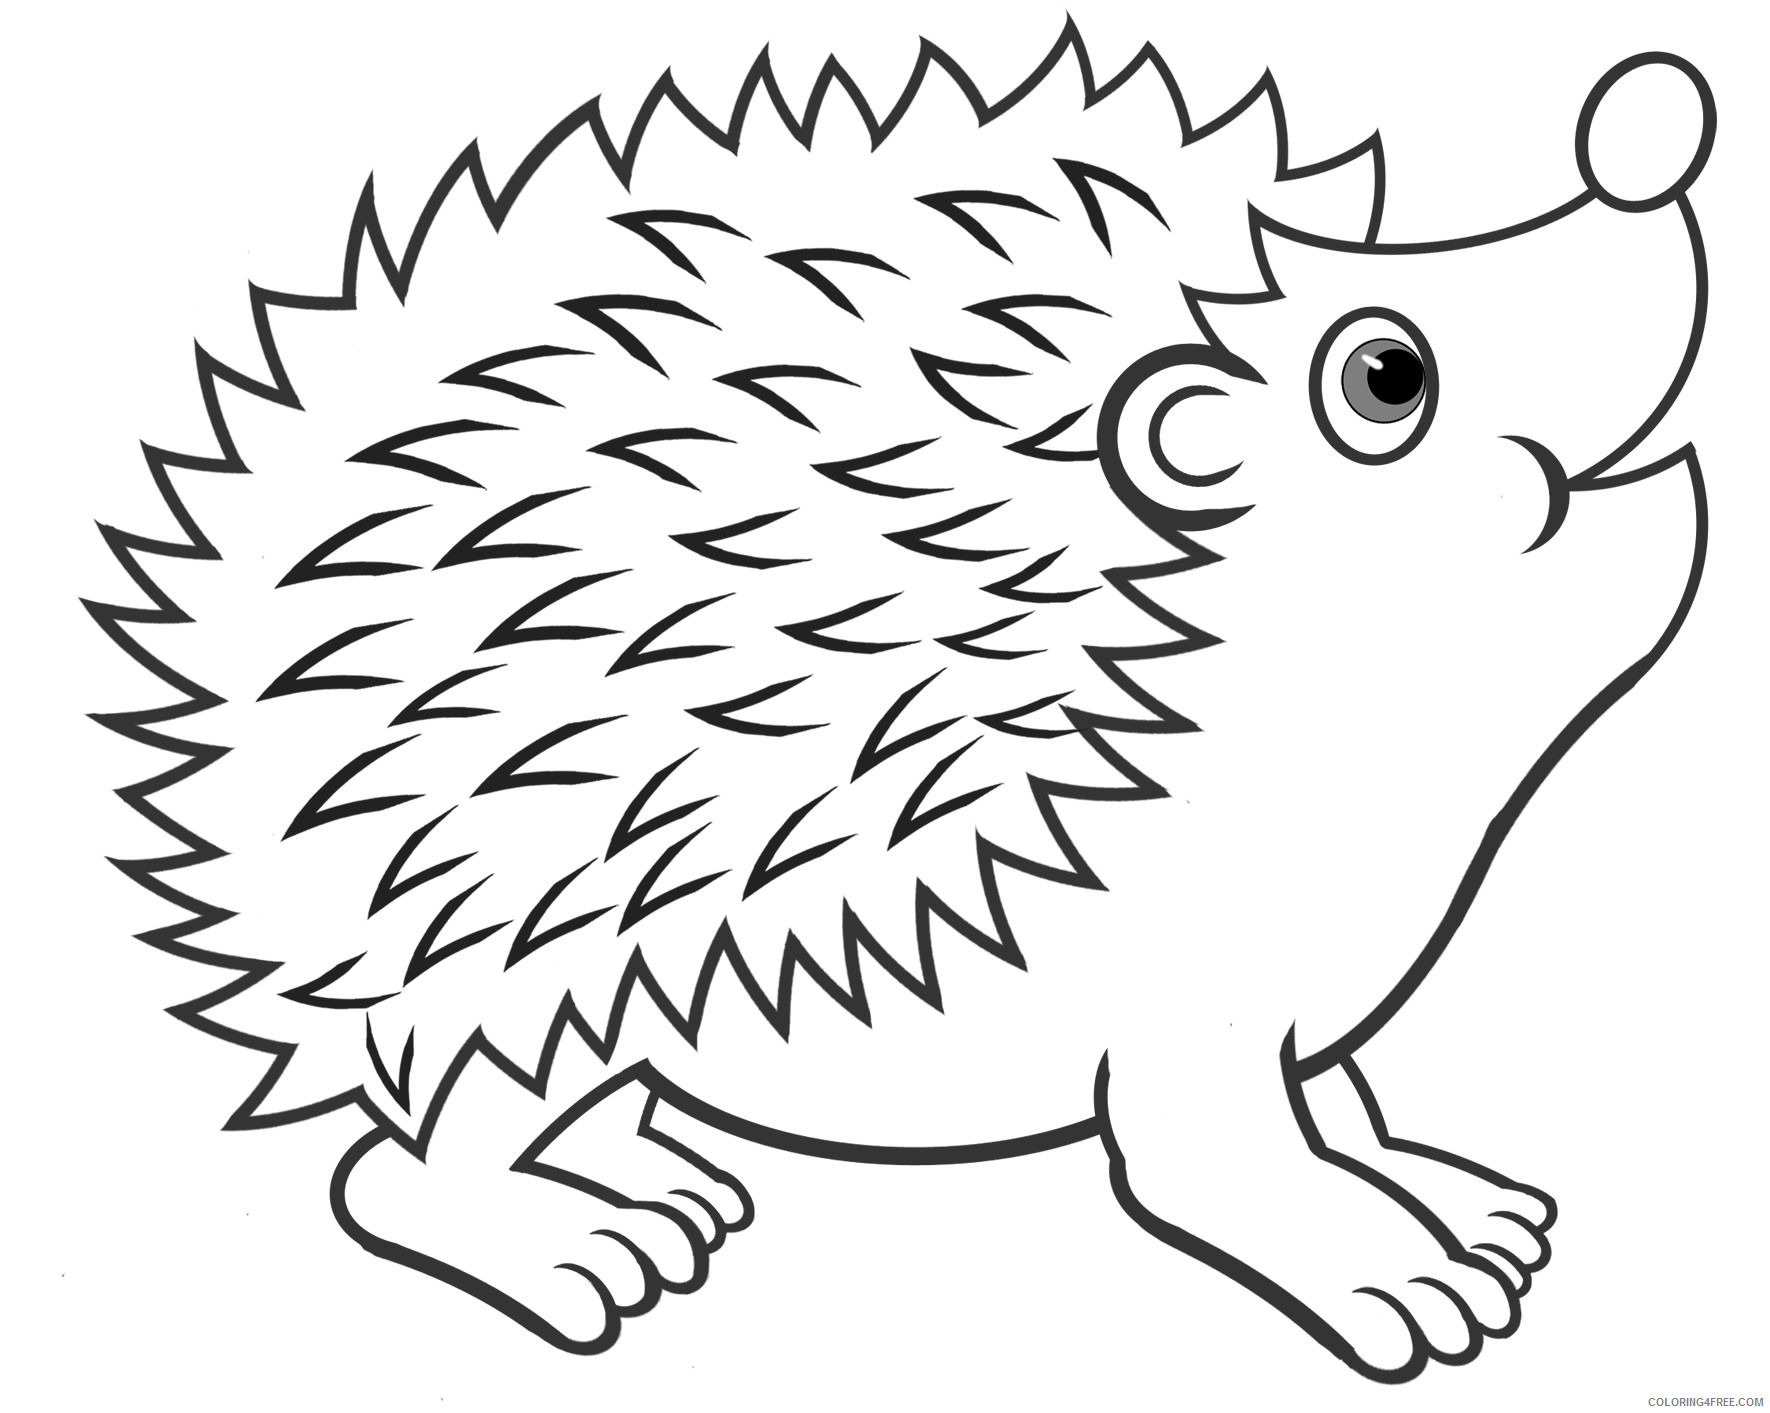 Hedgehog Coloring Pages Animal Printable Sheets Cute Hedgehog 2021 2631 Coloring4free